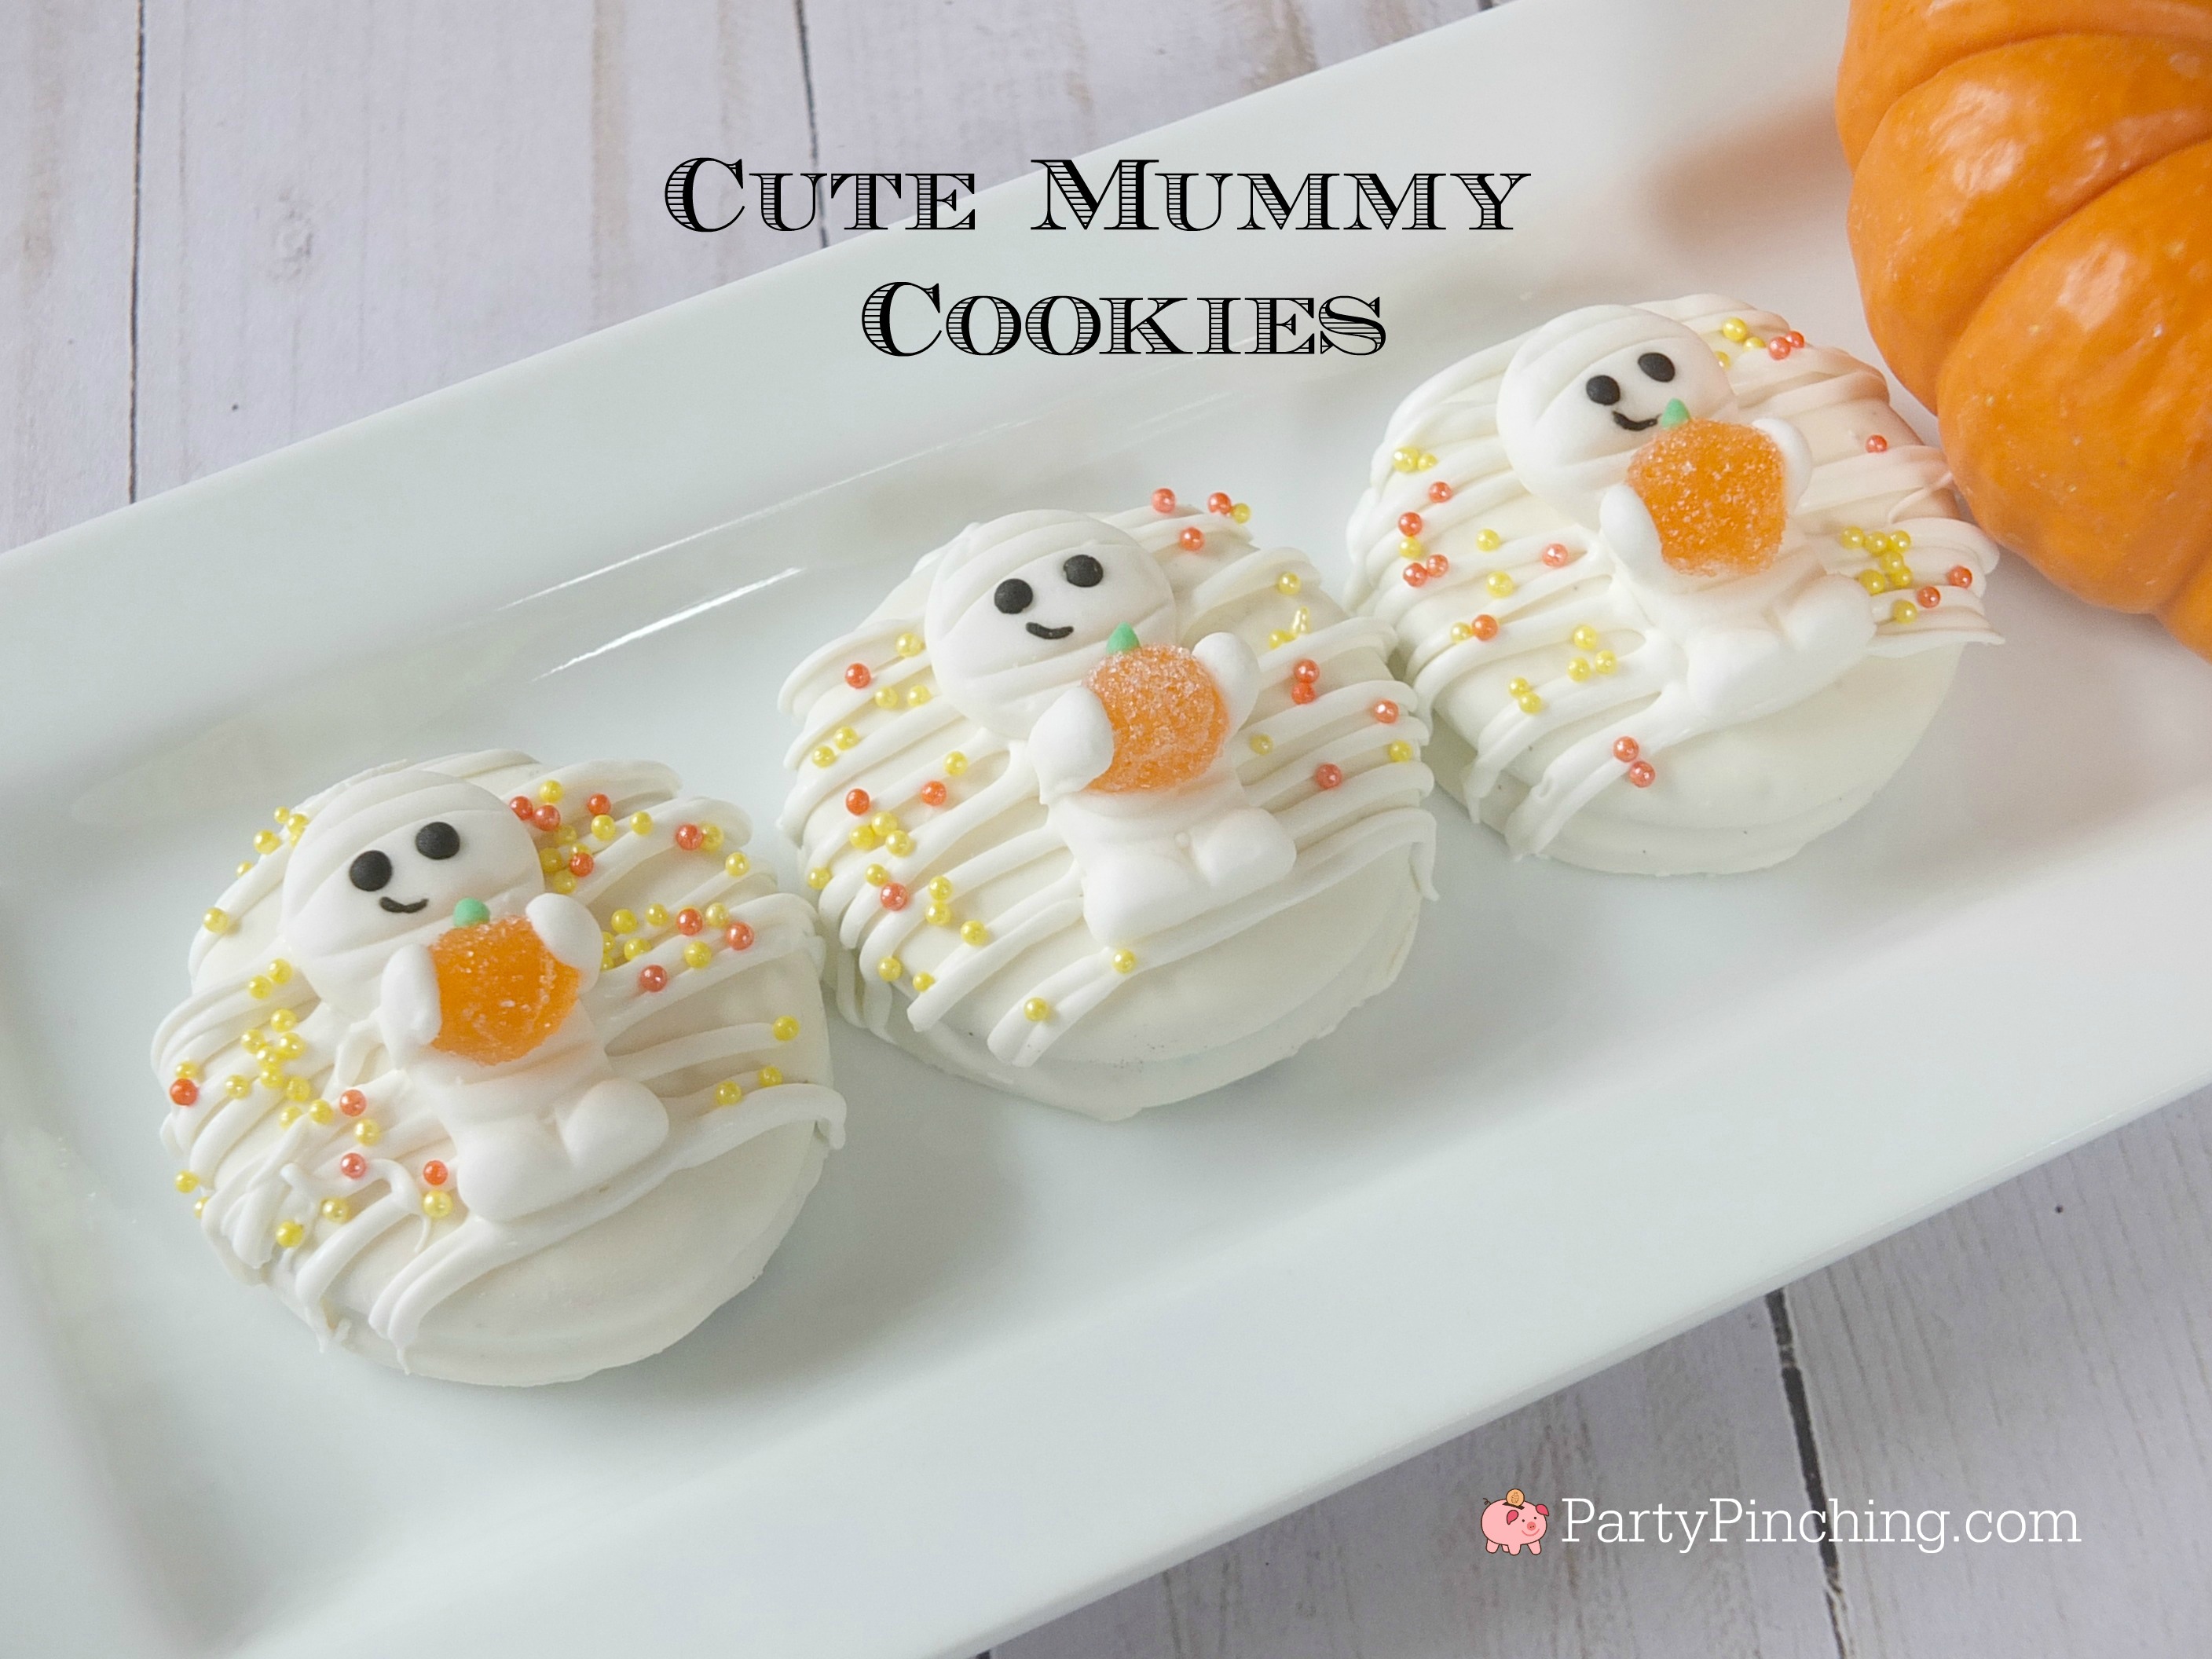 Mummy cookies, cute cookies for Halloween, Oreo Halloween cookies, Halloween treat party food ideas for kids, fun food, sweet treats, kid friendly food, Wilton